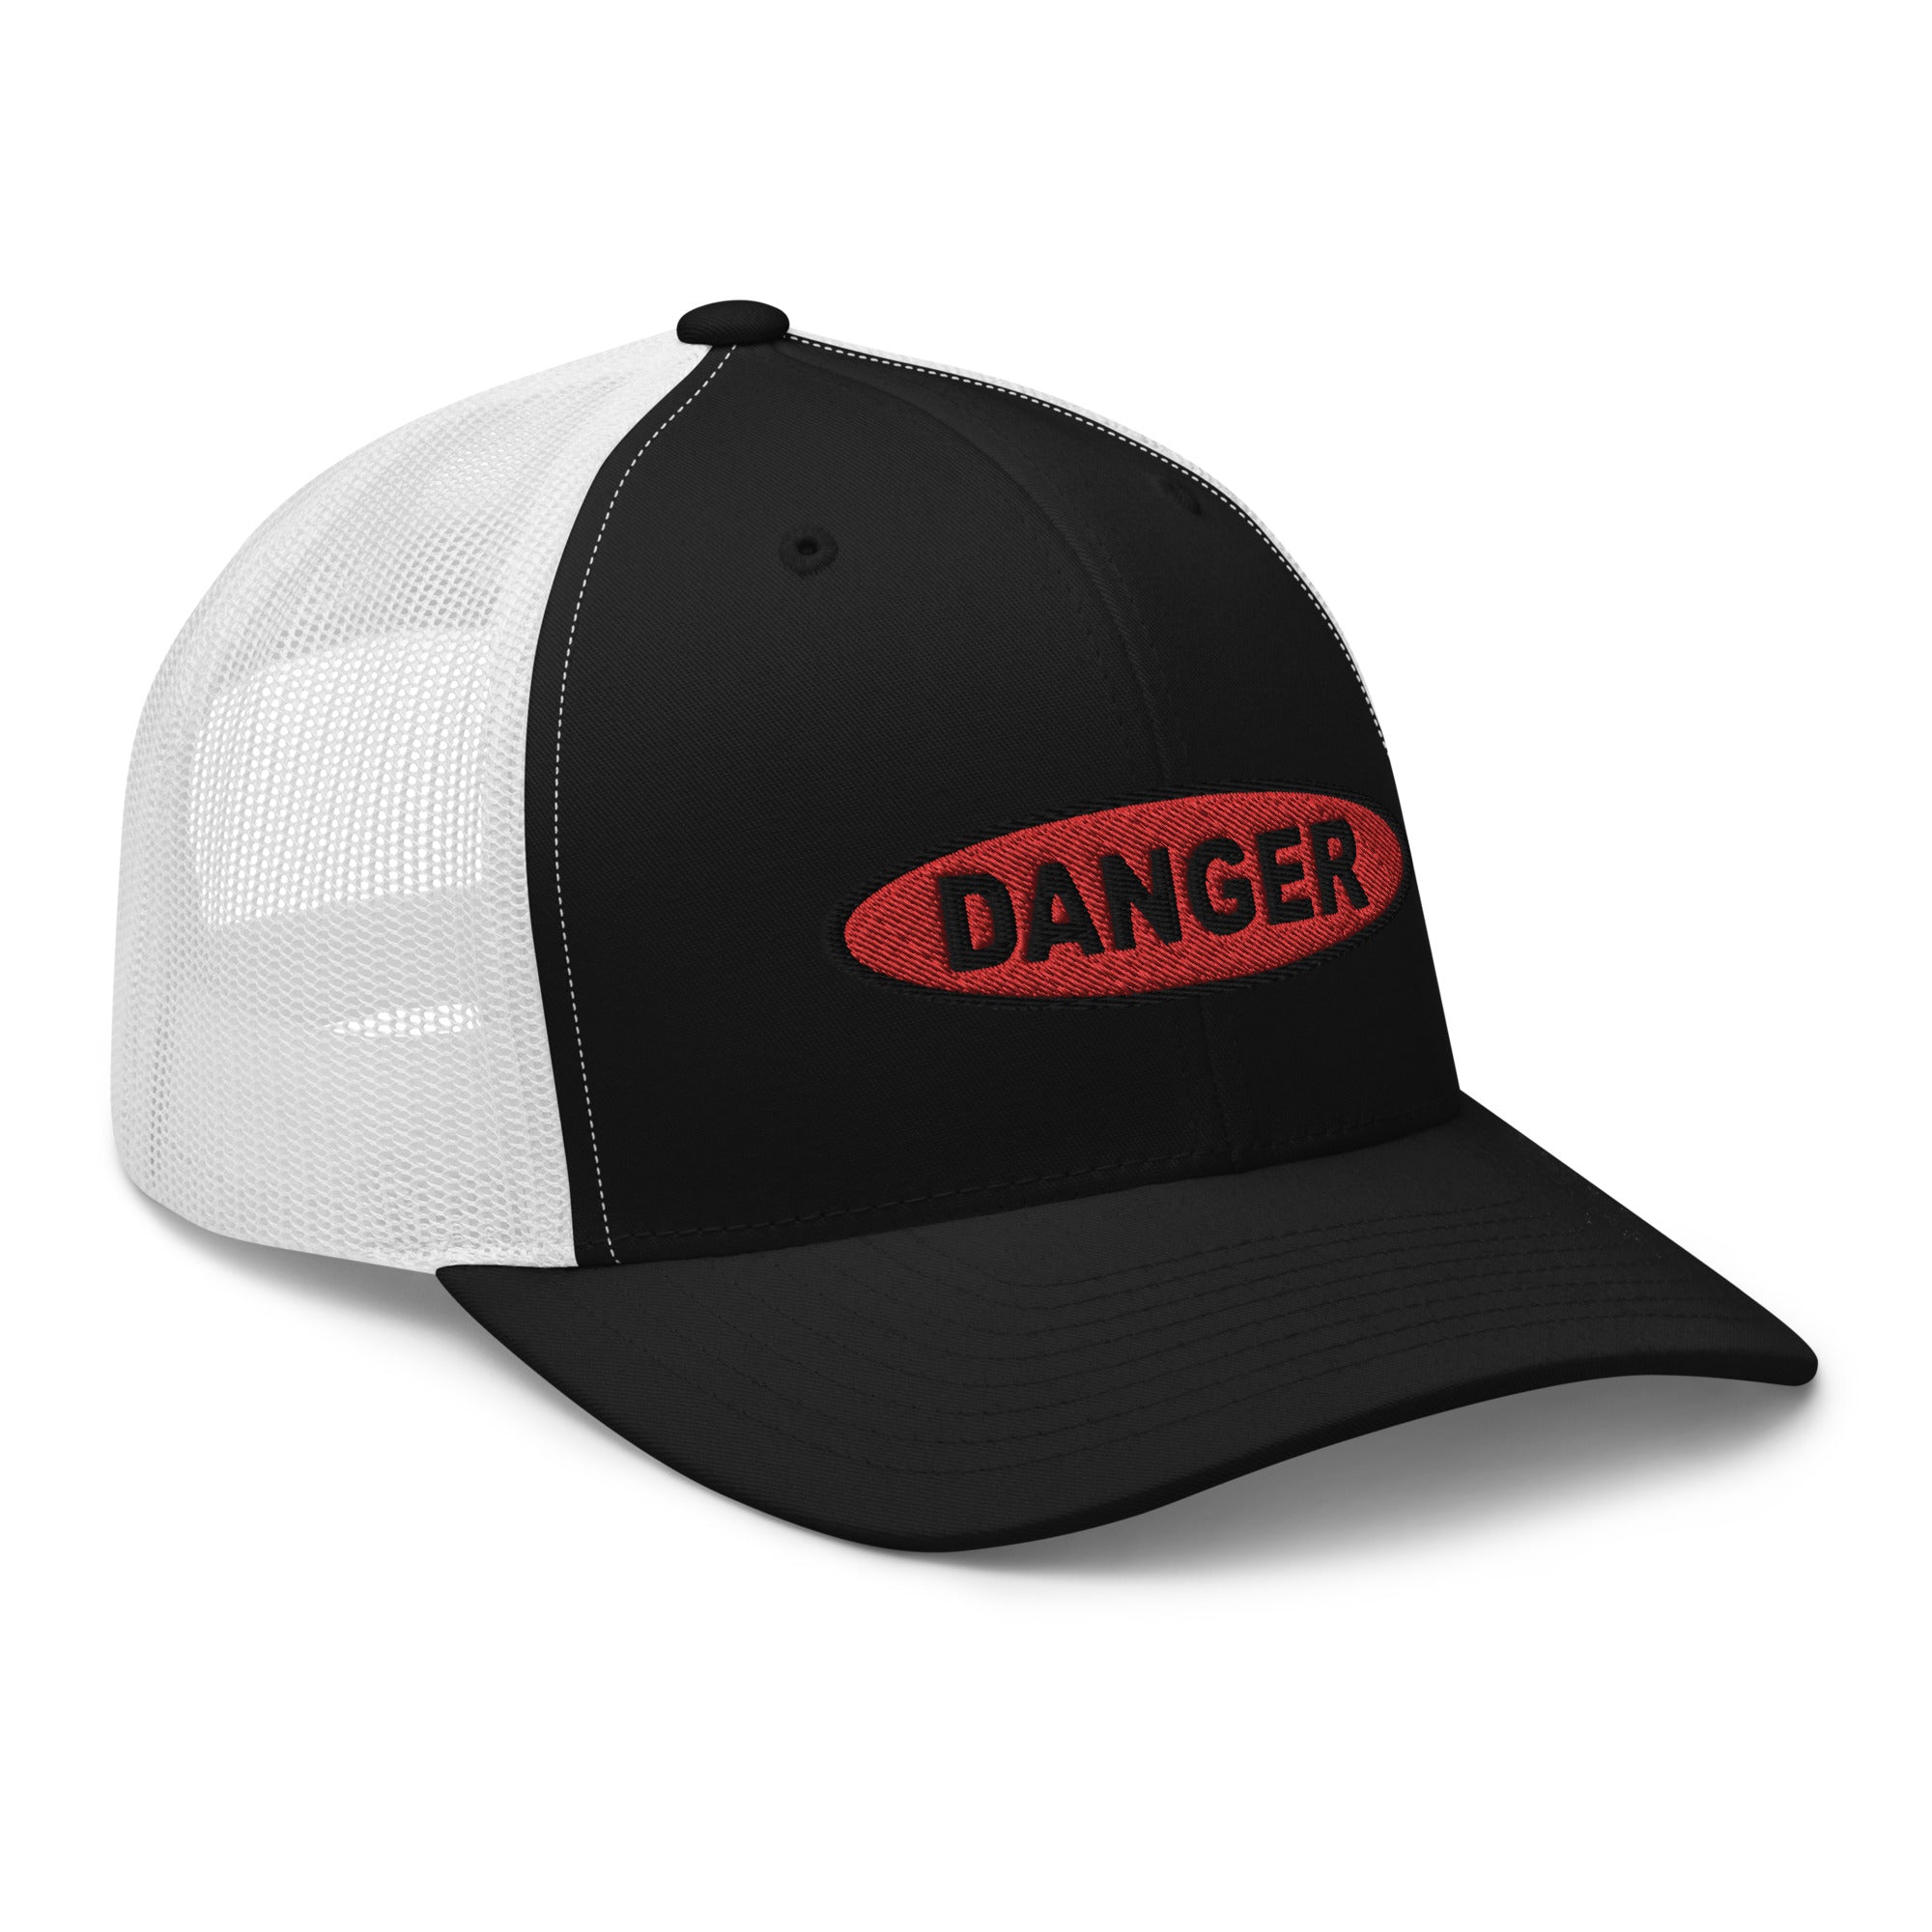 Red Danger Warning Sign Embroidered Retro Trucker Cap Snapback Hat